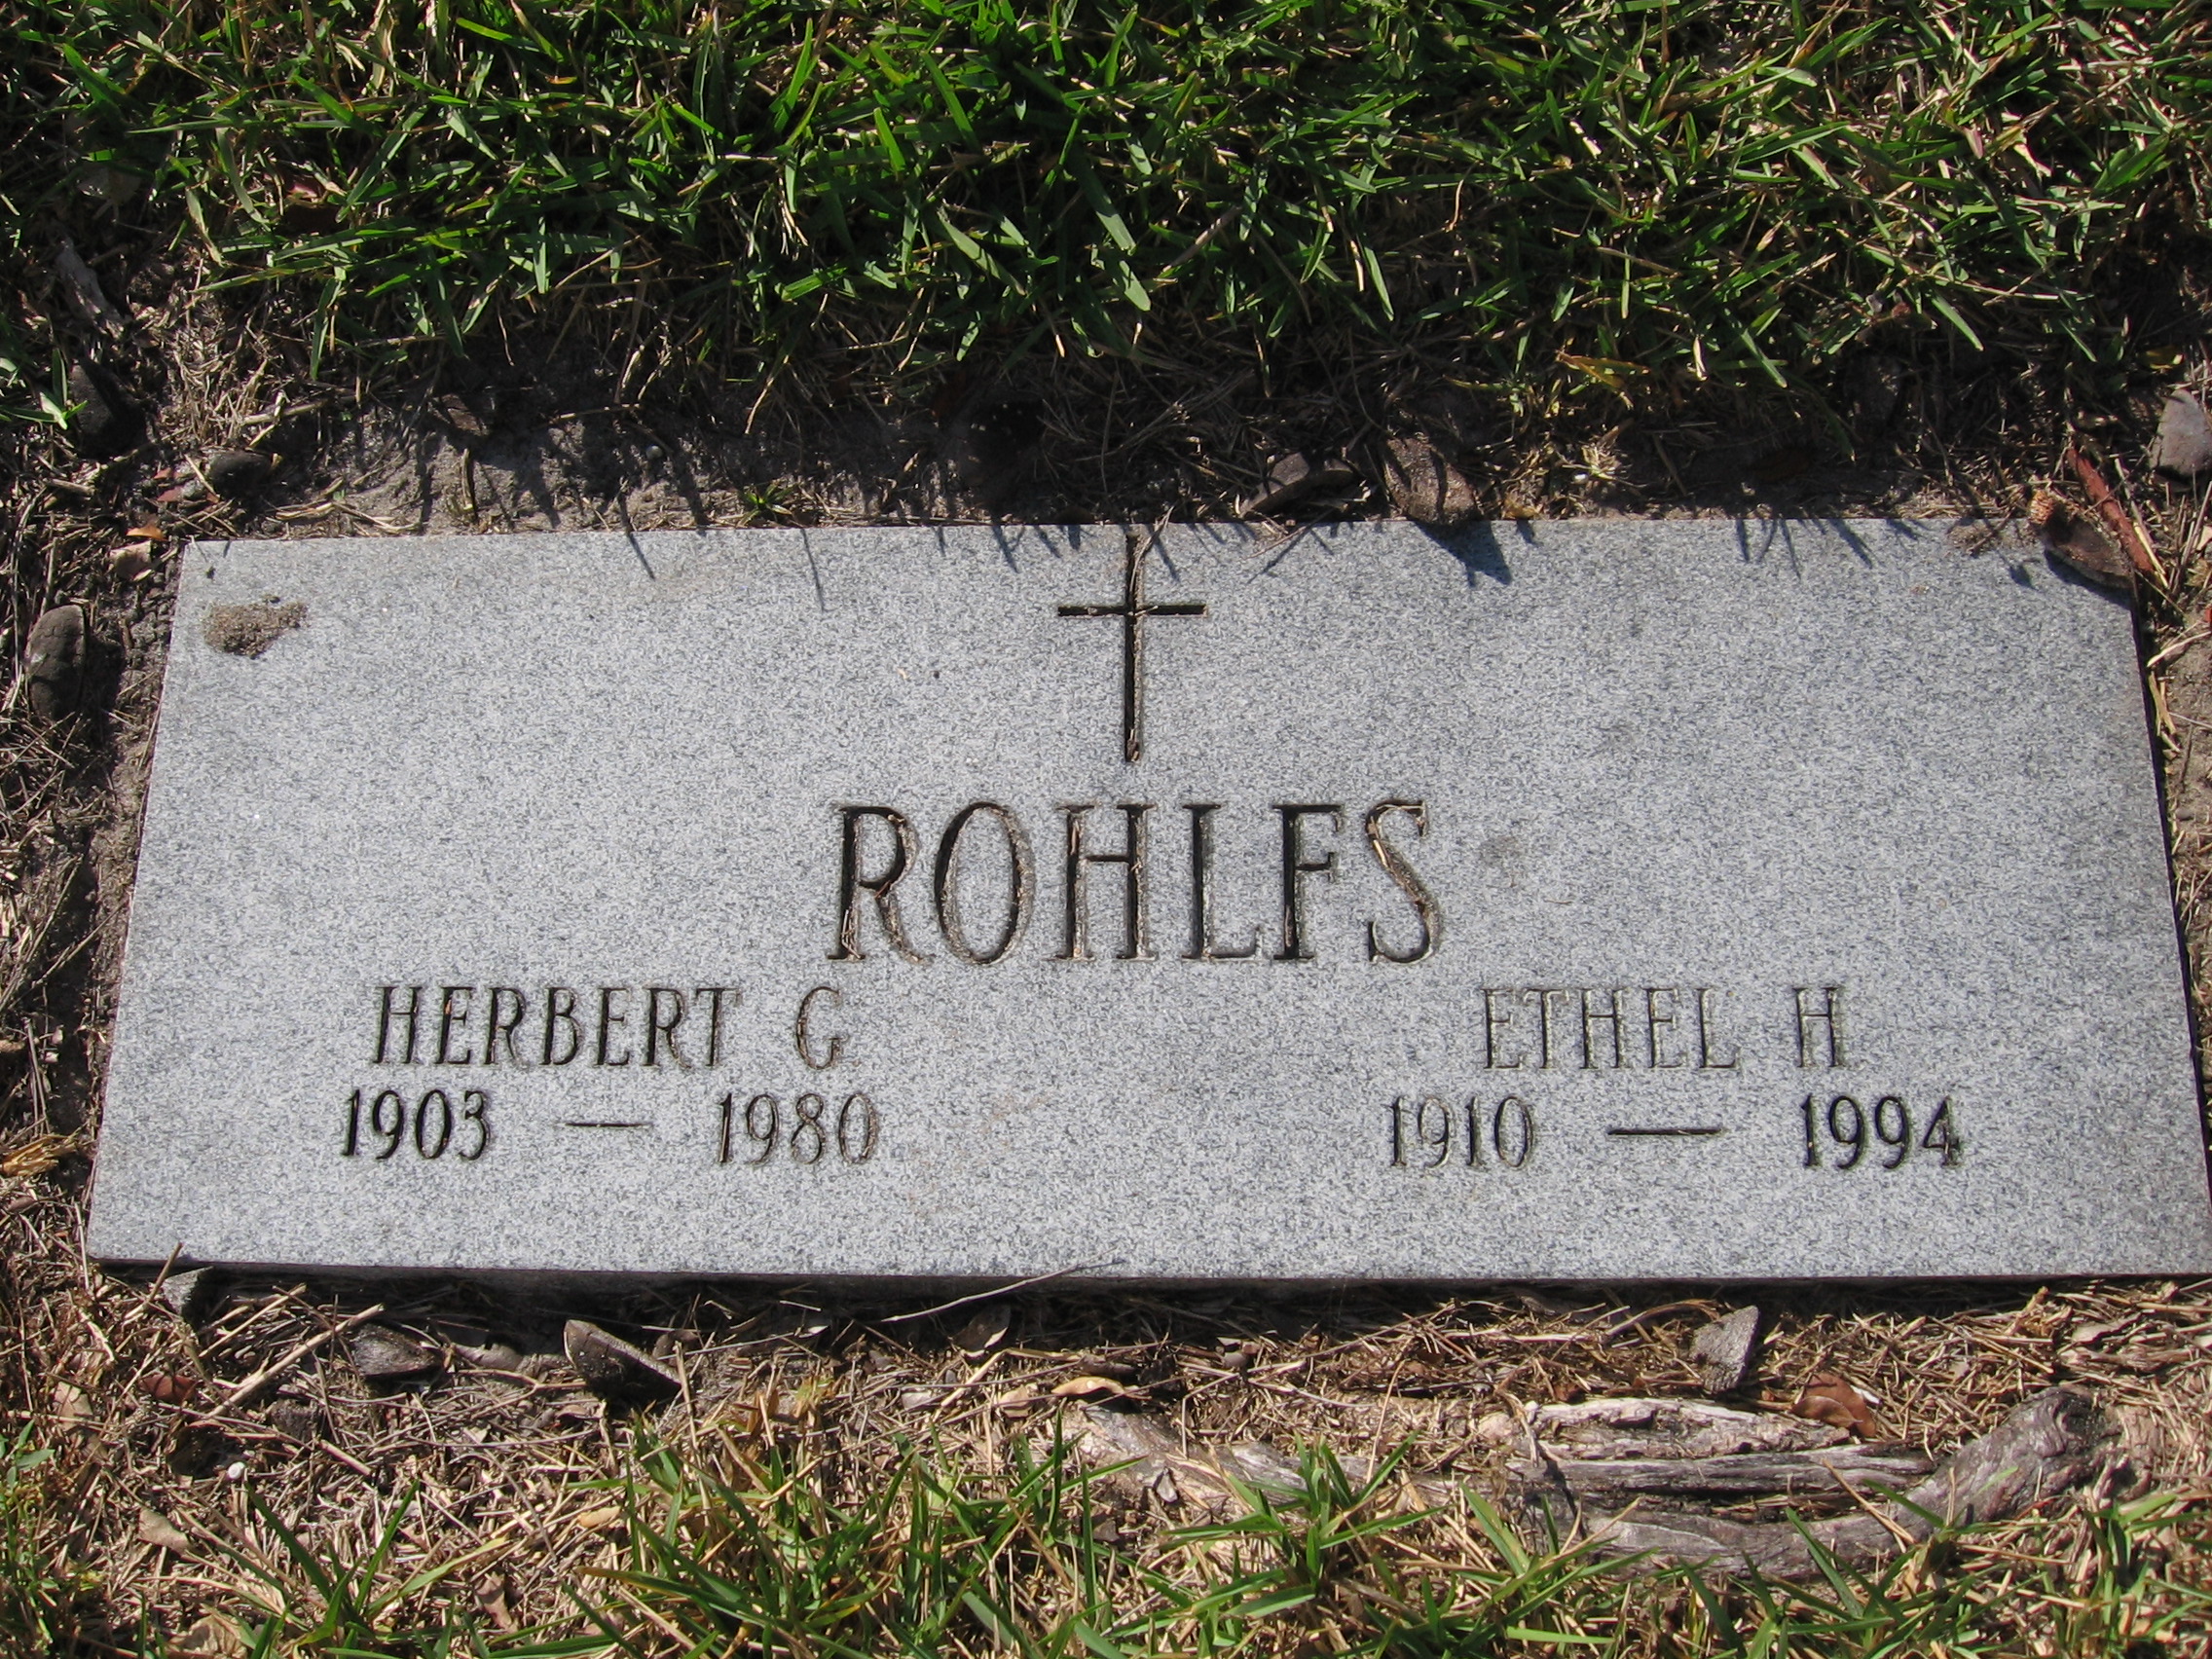 Ethel H Rohlfs